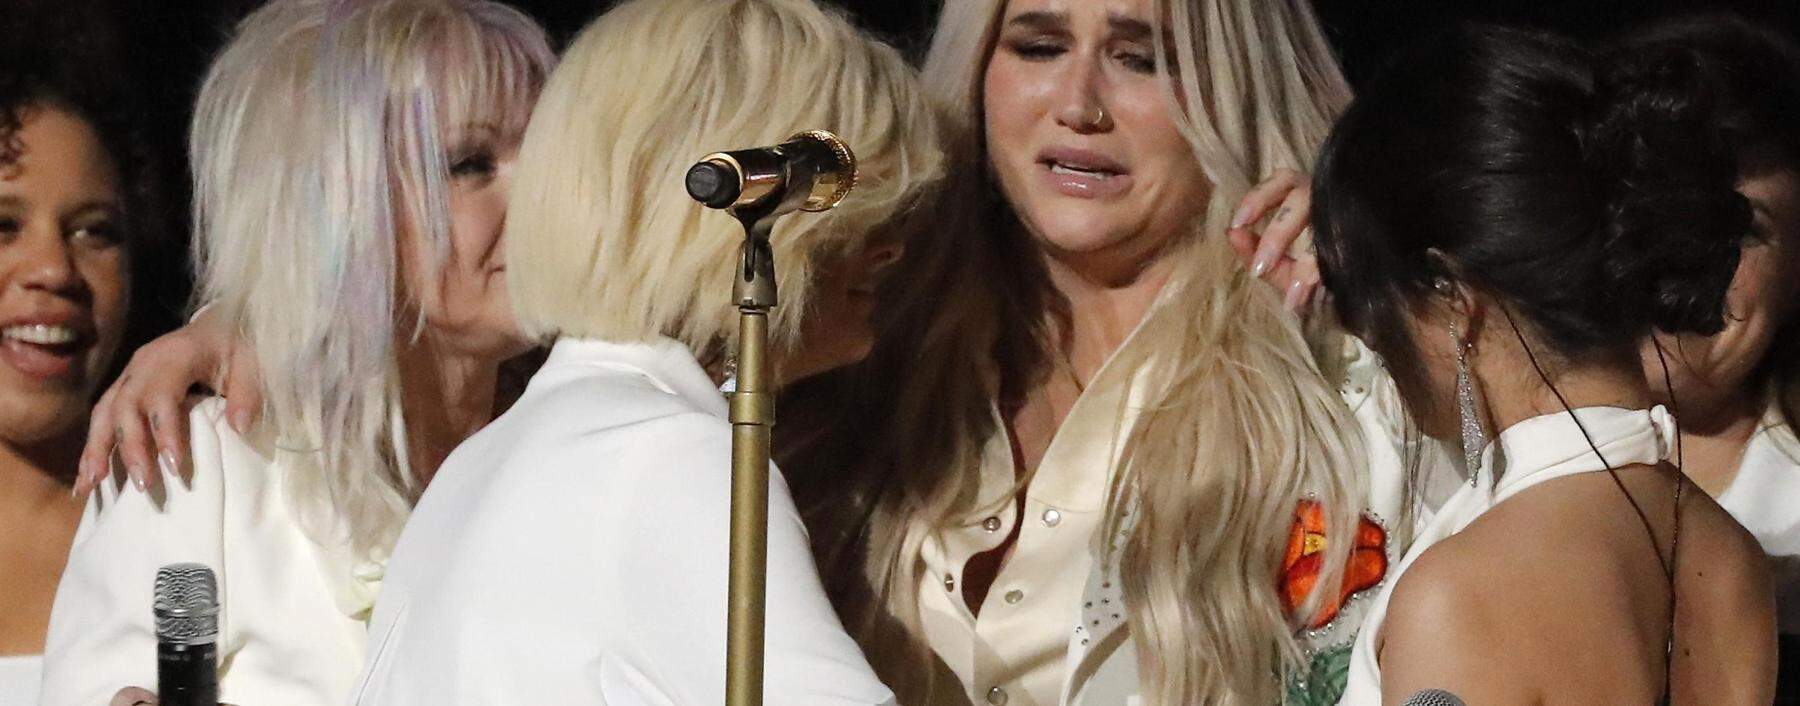 Kesha sang mit einem Allstar-Backgroundchor.